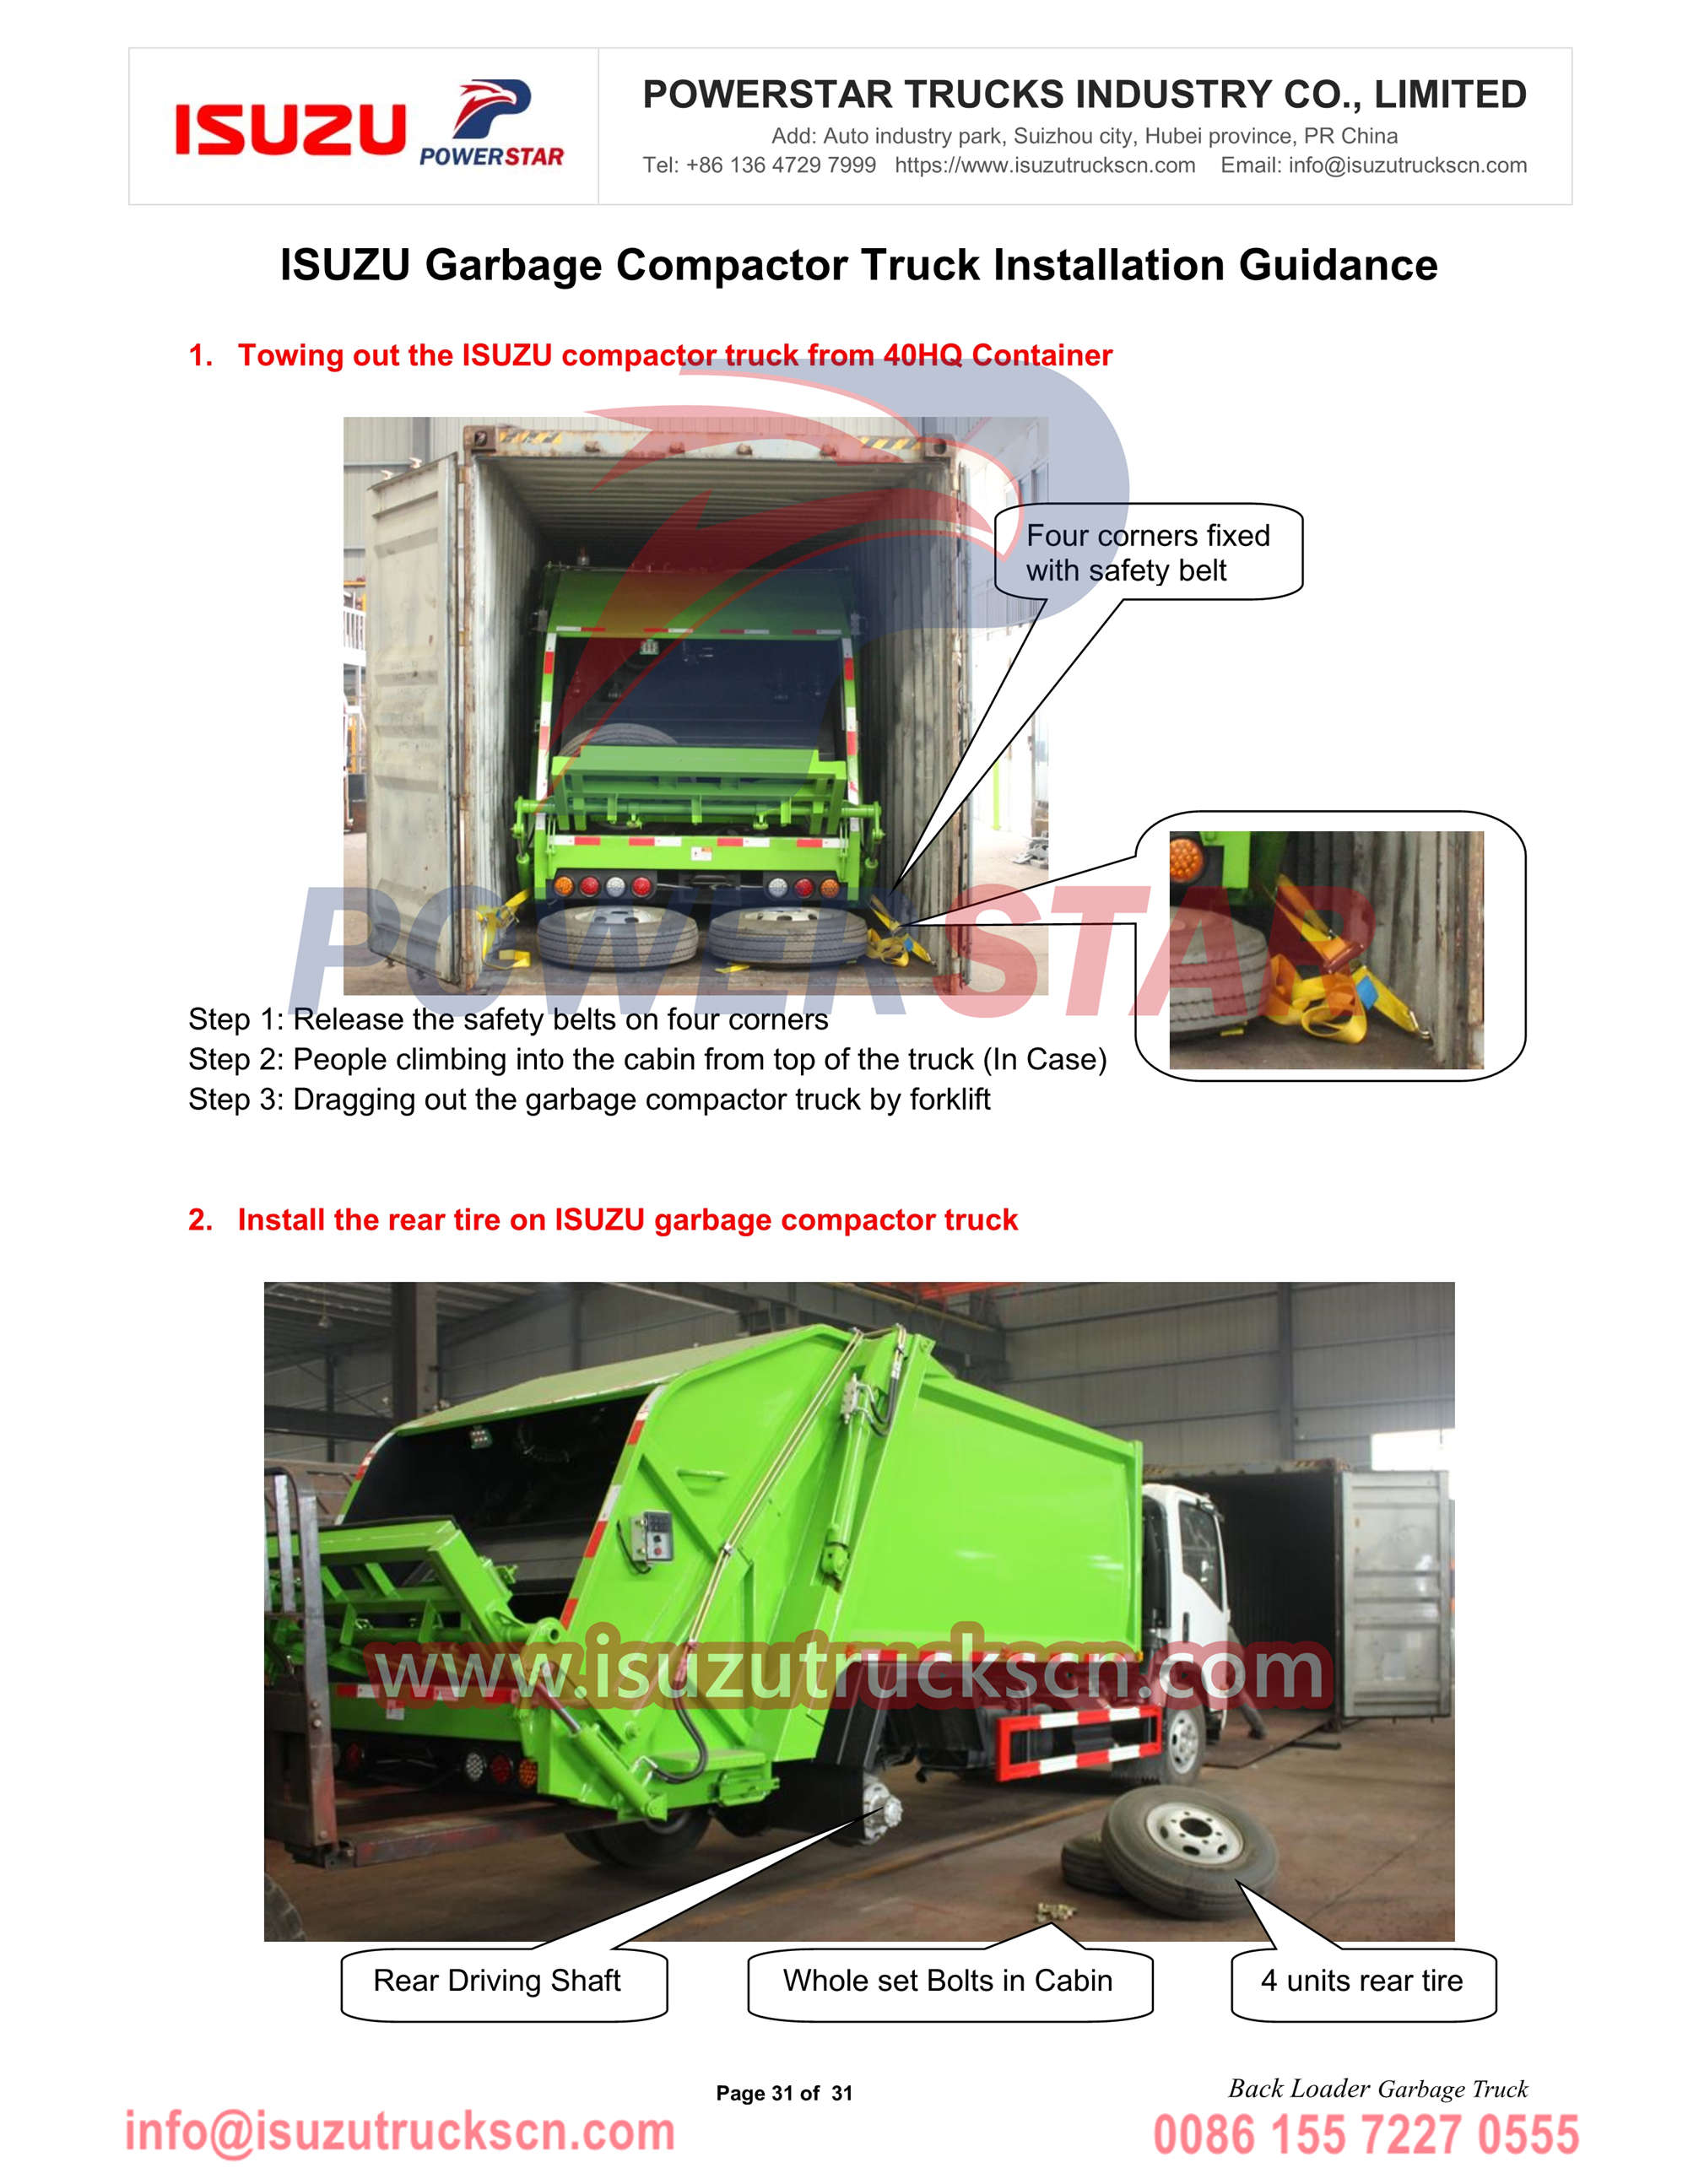 ISUZU NPR 10cbm refuse compactor truck export Cape Verde